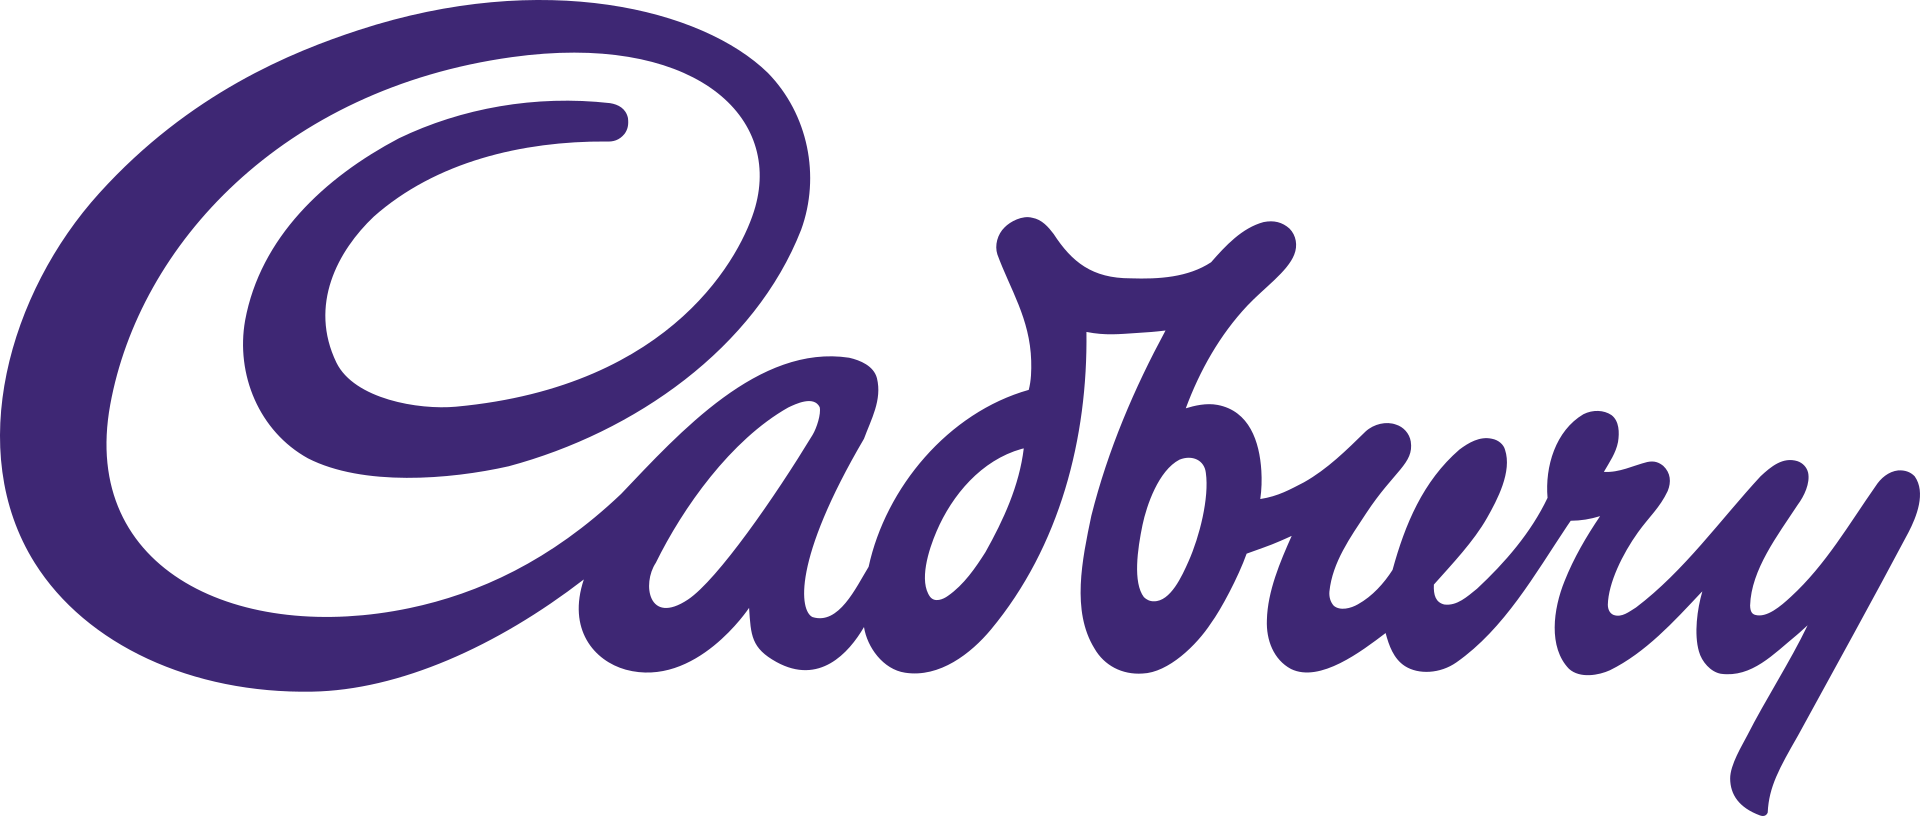 Cadbury purple logo branding